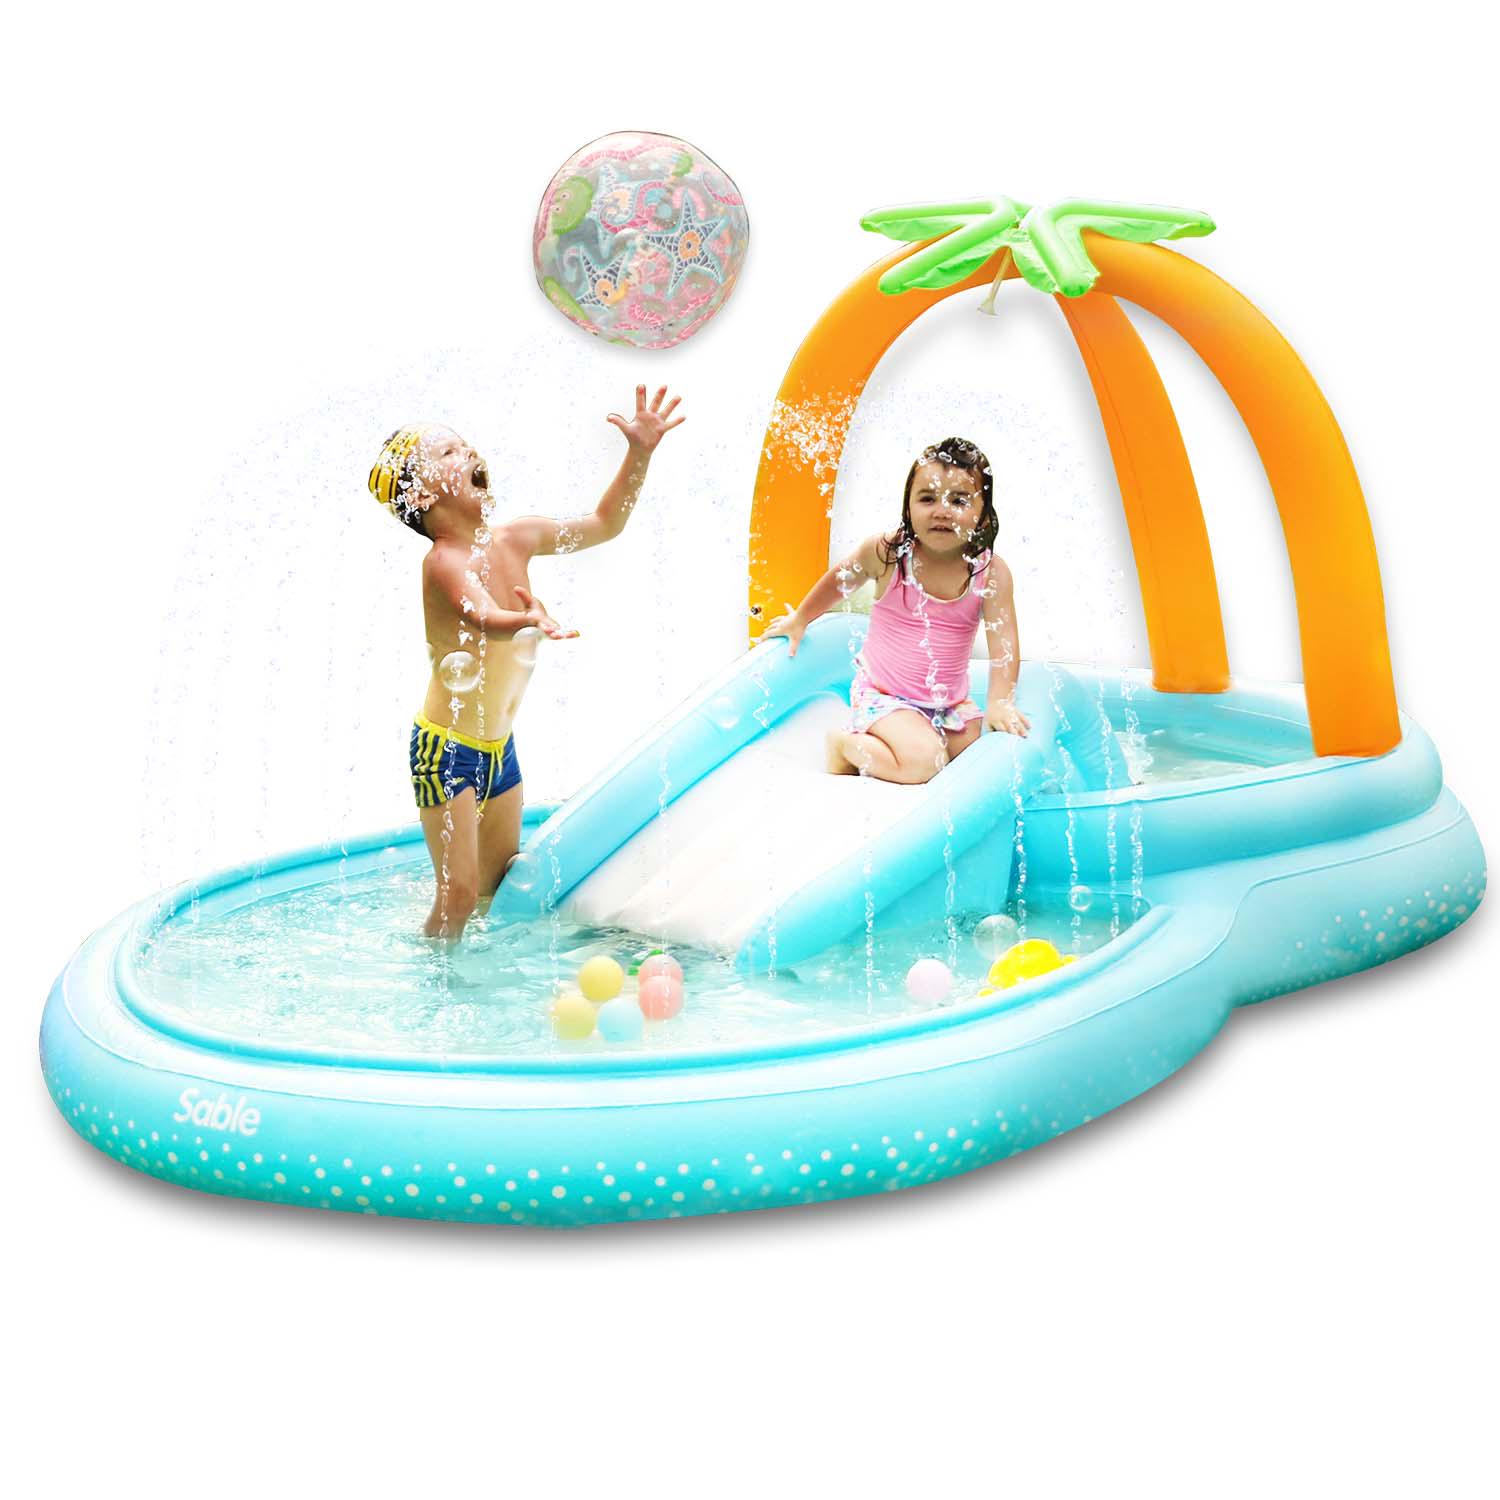 Sable Inflatable Play Center Pool, Kiddie Pool with Water Slid...